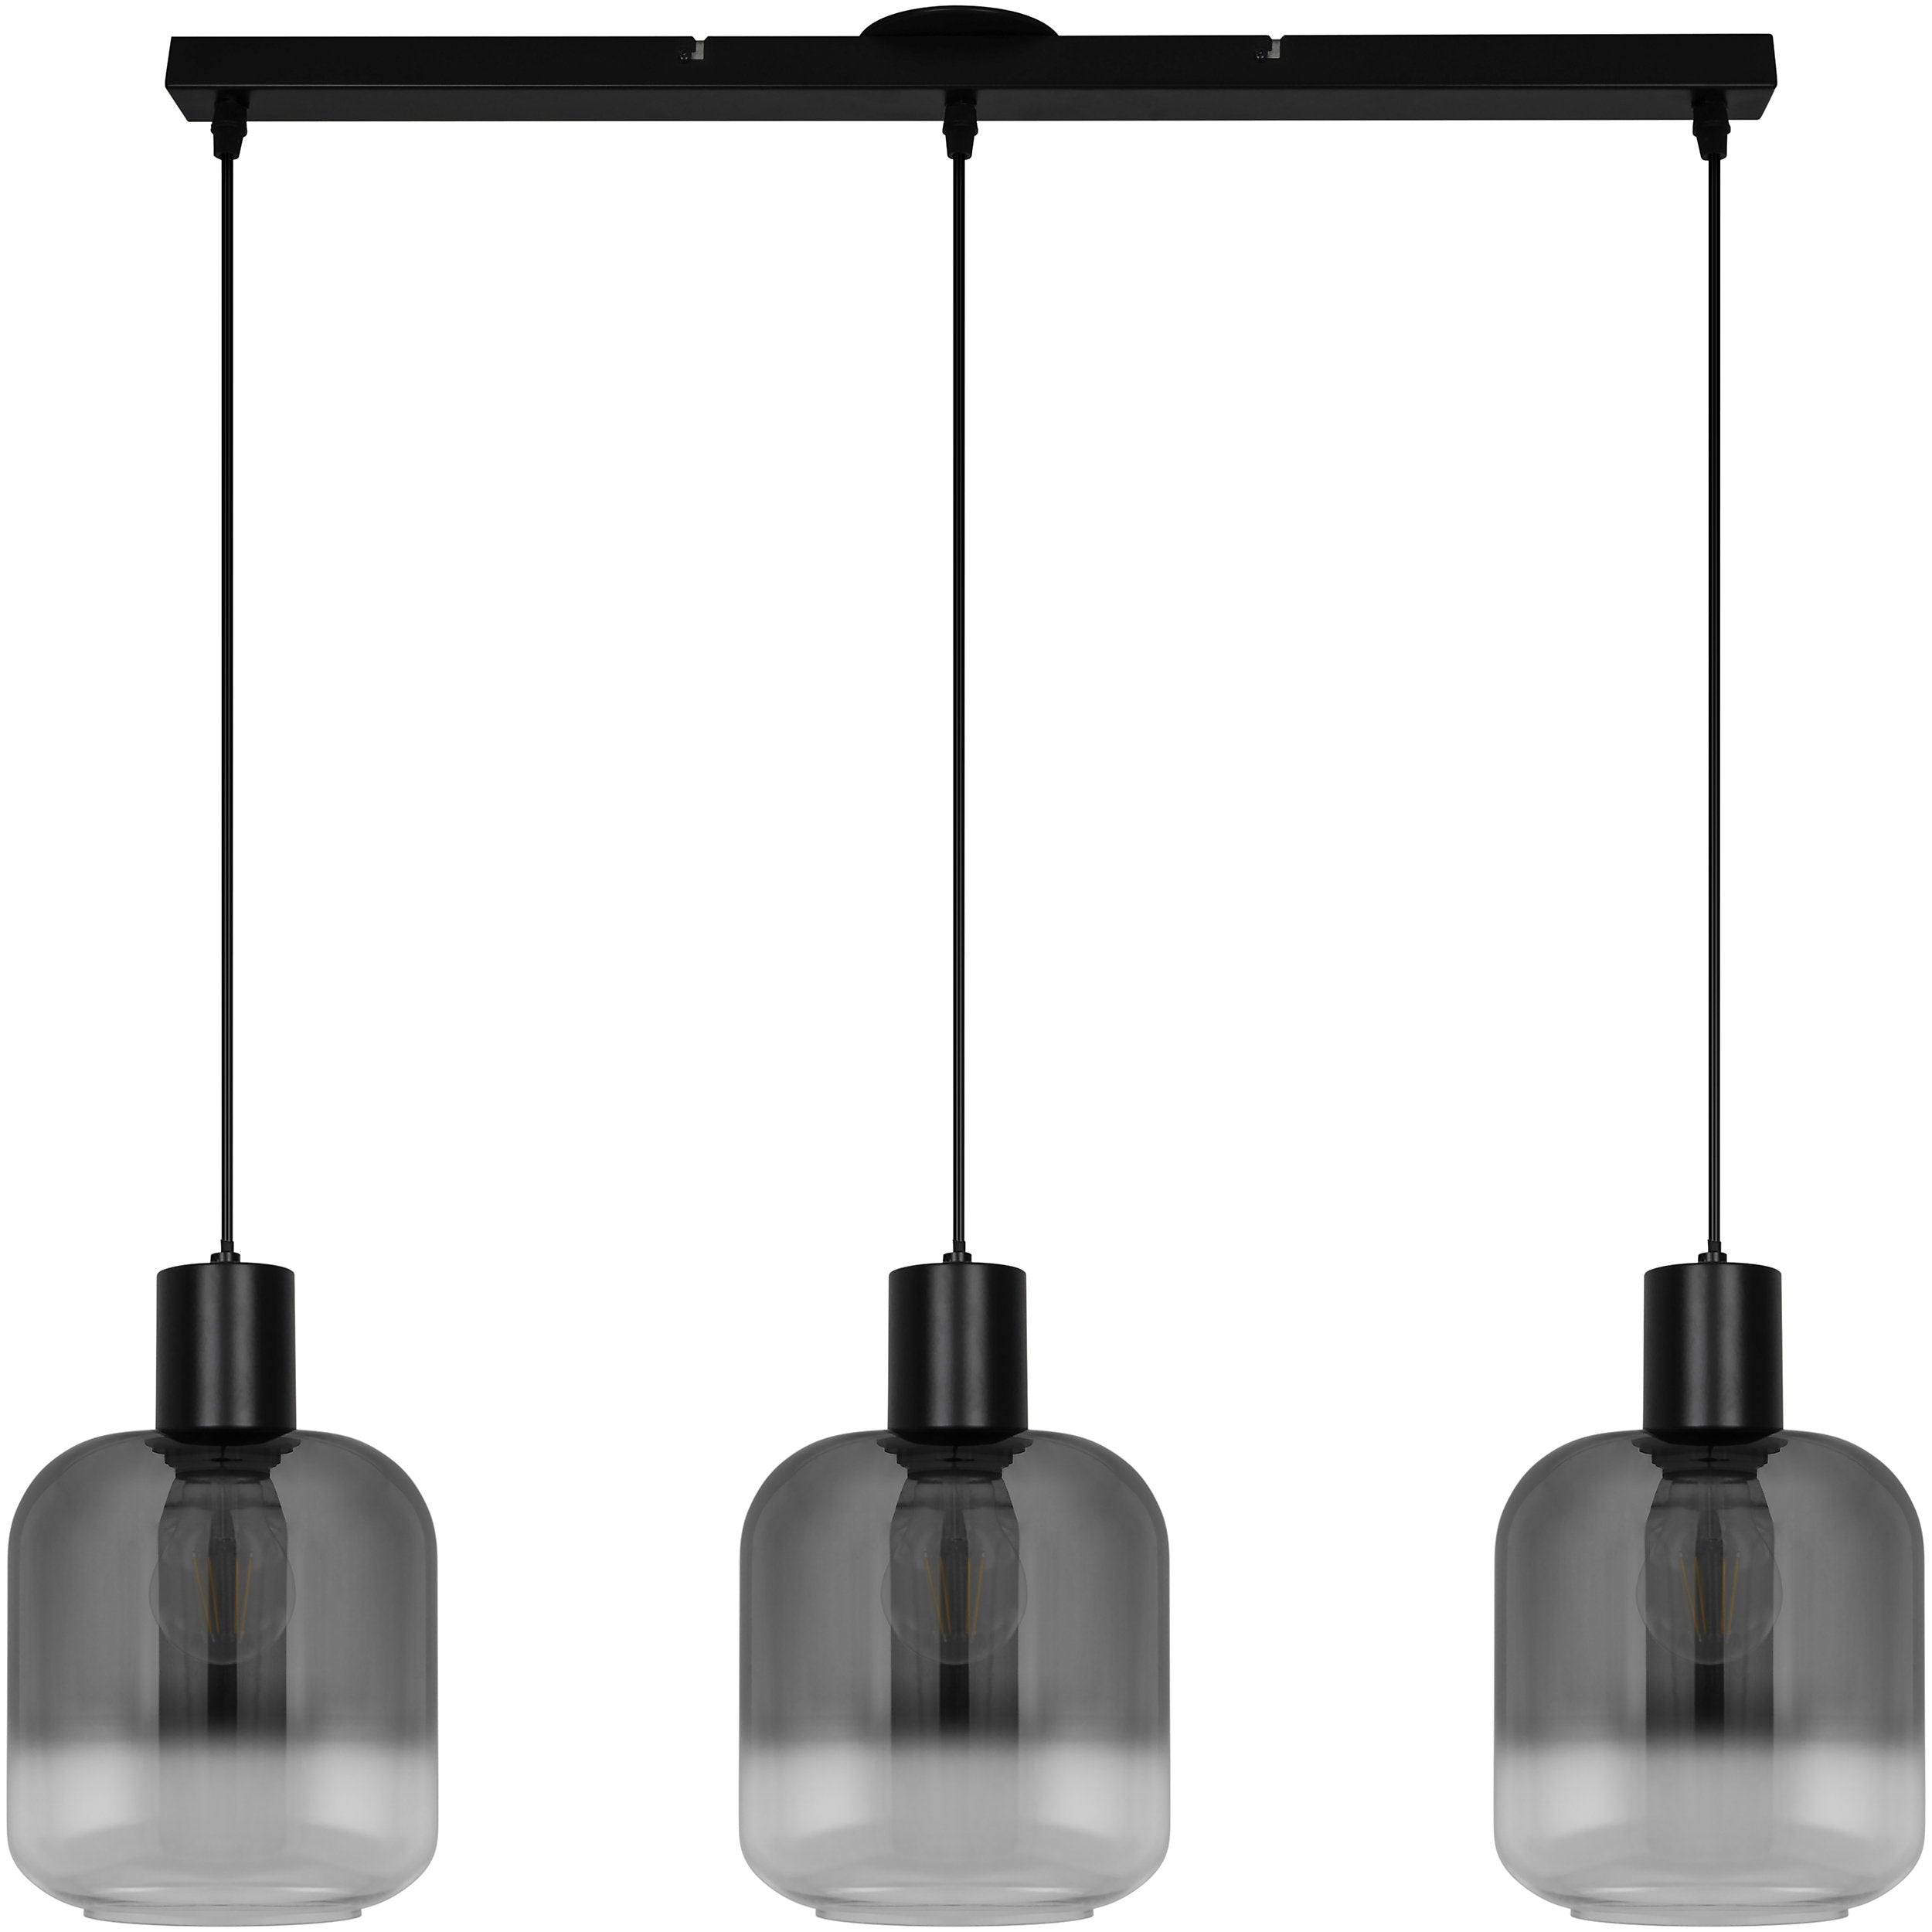 GoodHome Shepton Traditional Matt Black Smoked effect 3 Lamp Pendant ceiling light-7951